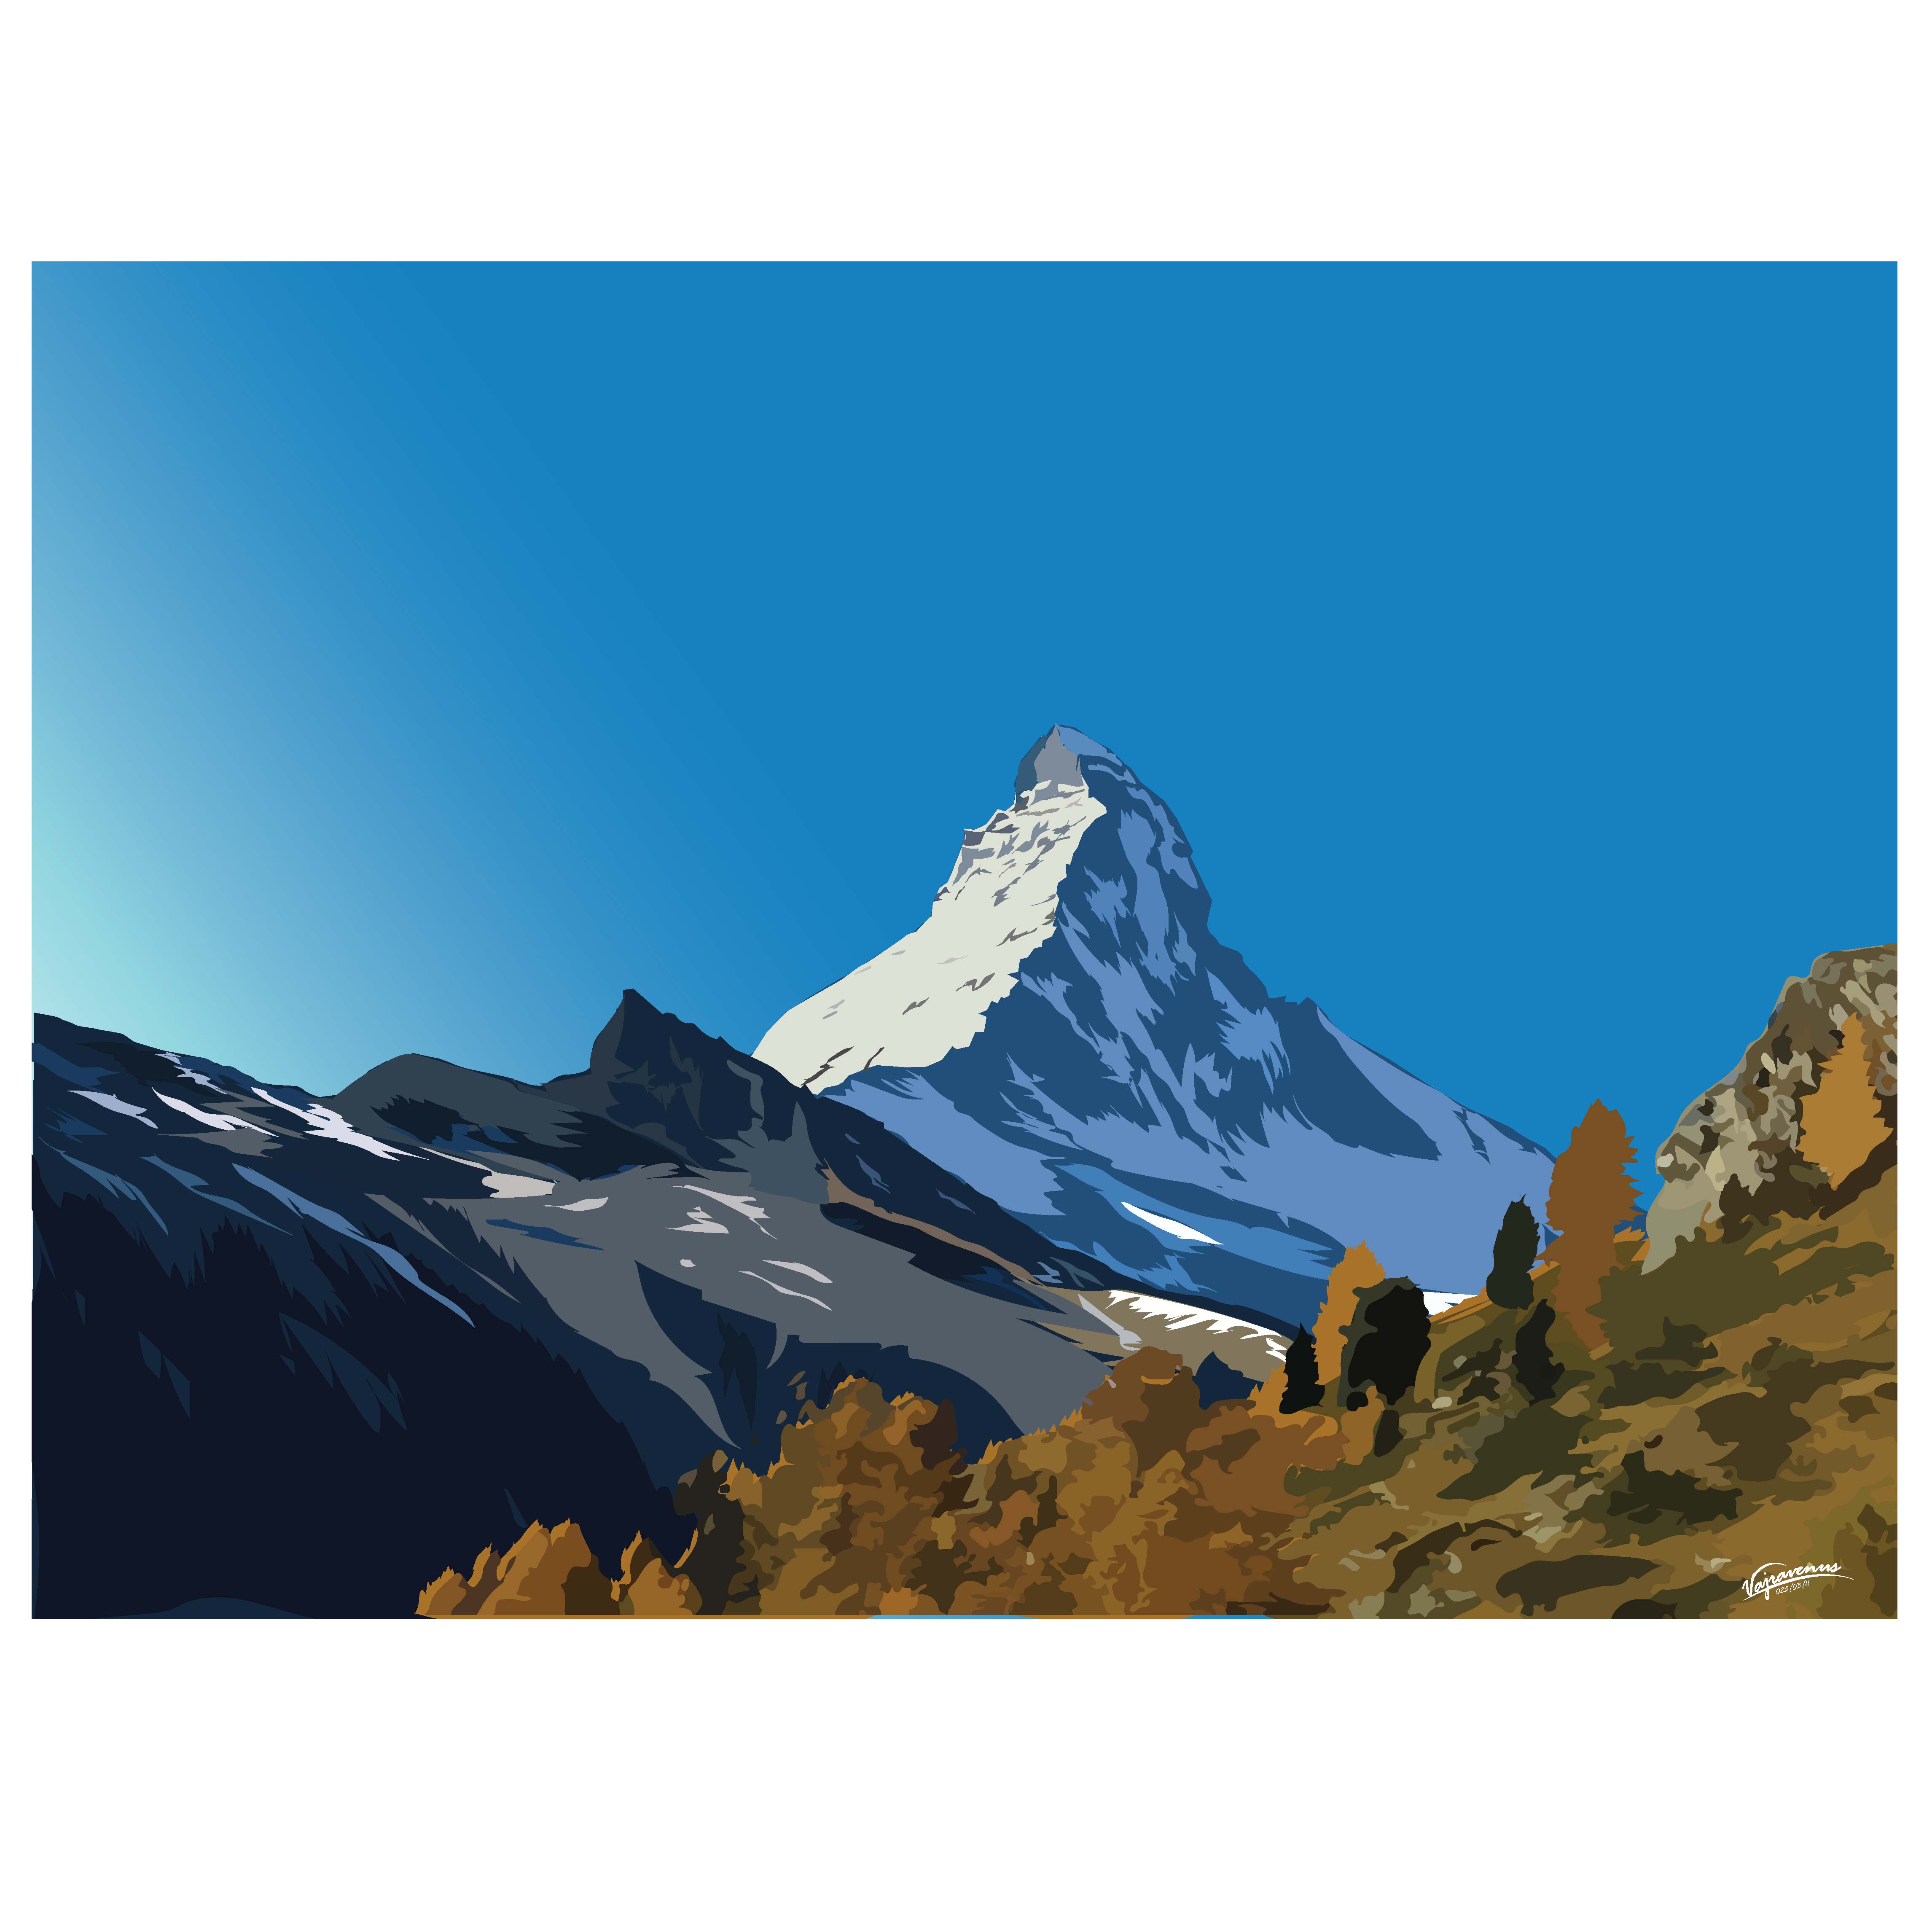 Mountain Matterhorn preview image.